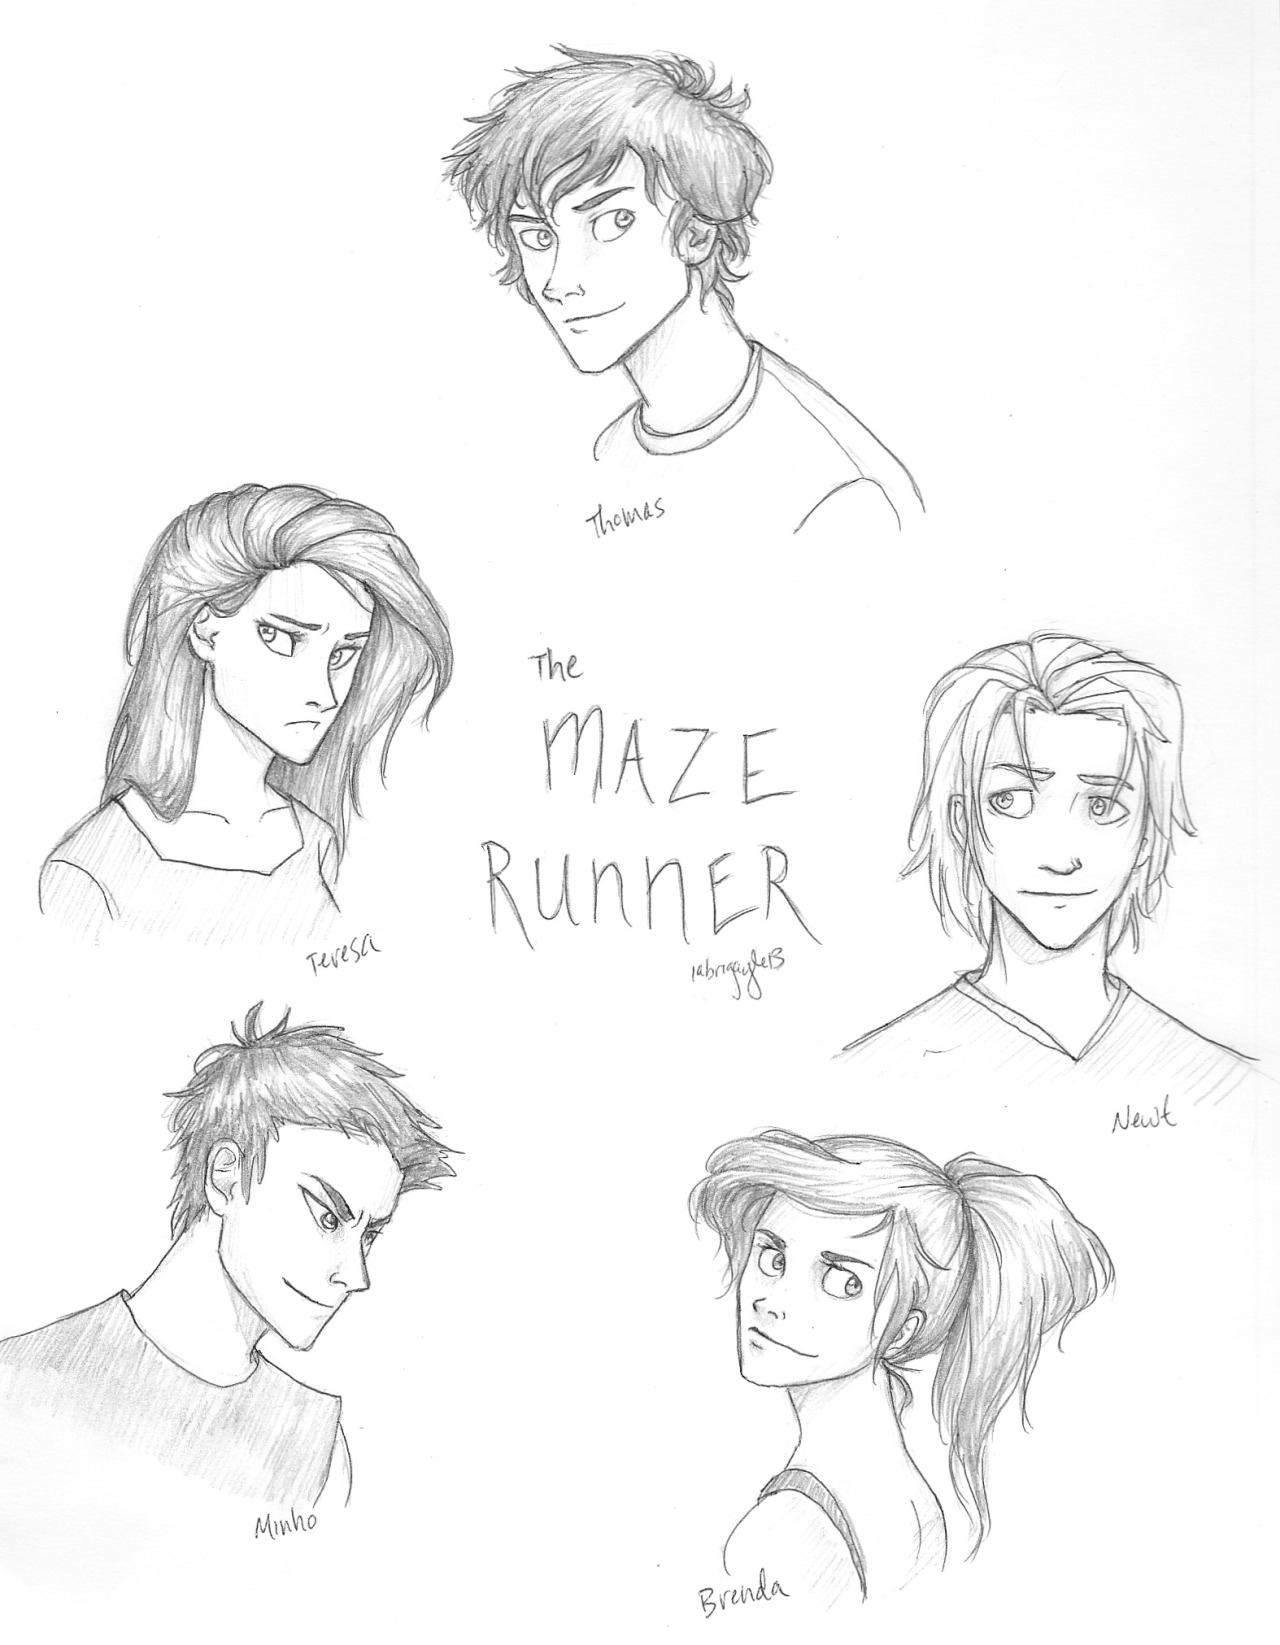 Thomas (Maze Runner) Fan Casting